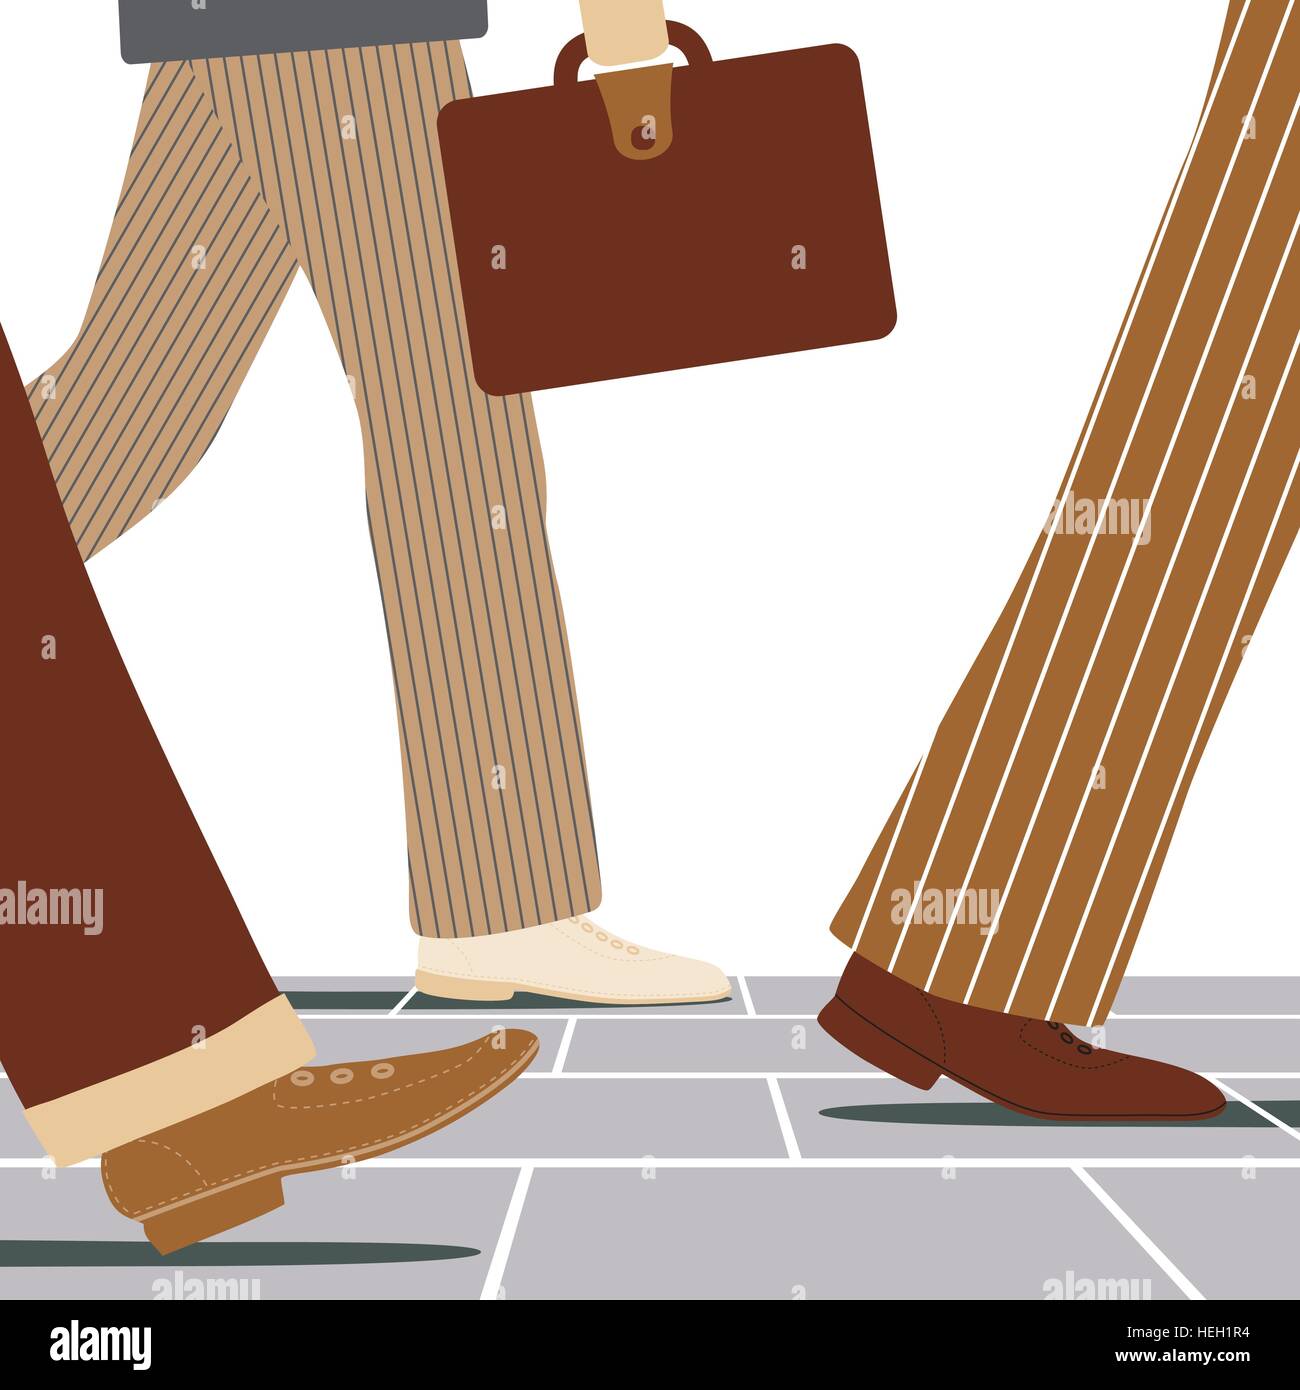 Vector illustration of the legs of businessmen walking along a street Stock Vector